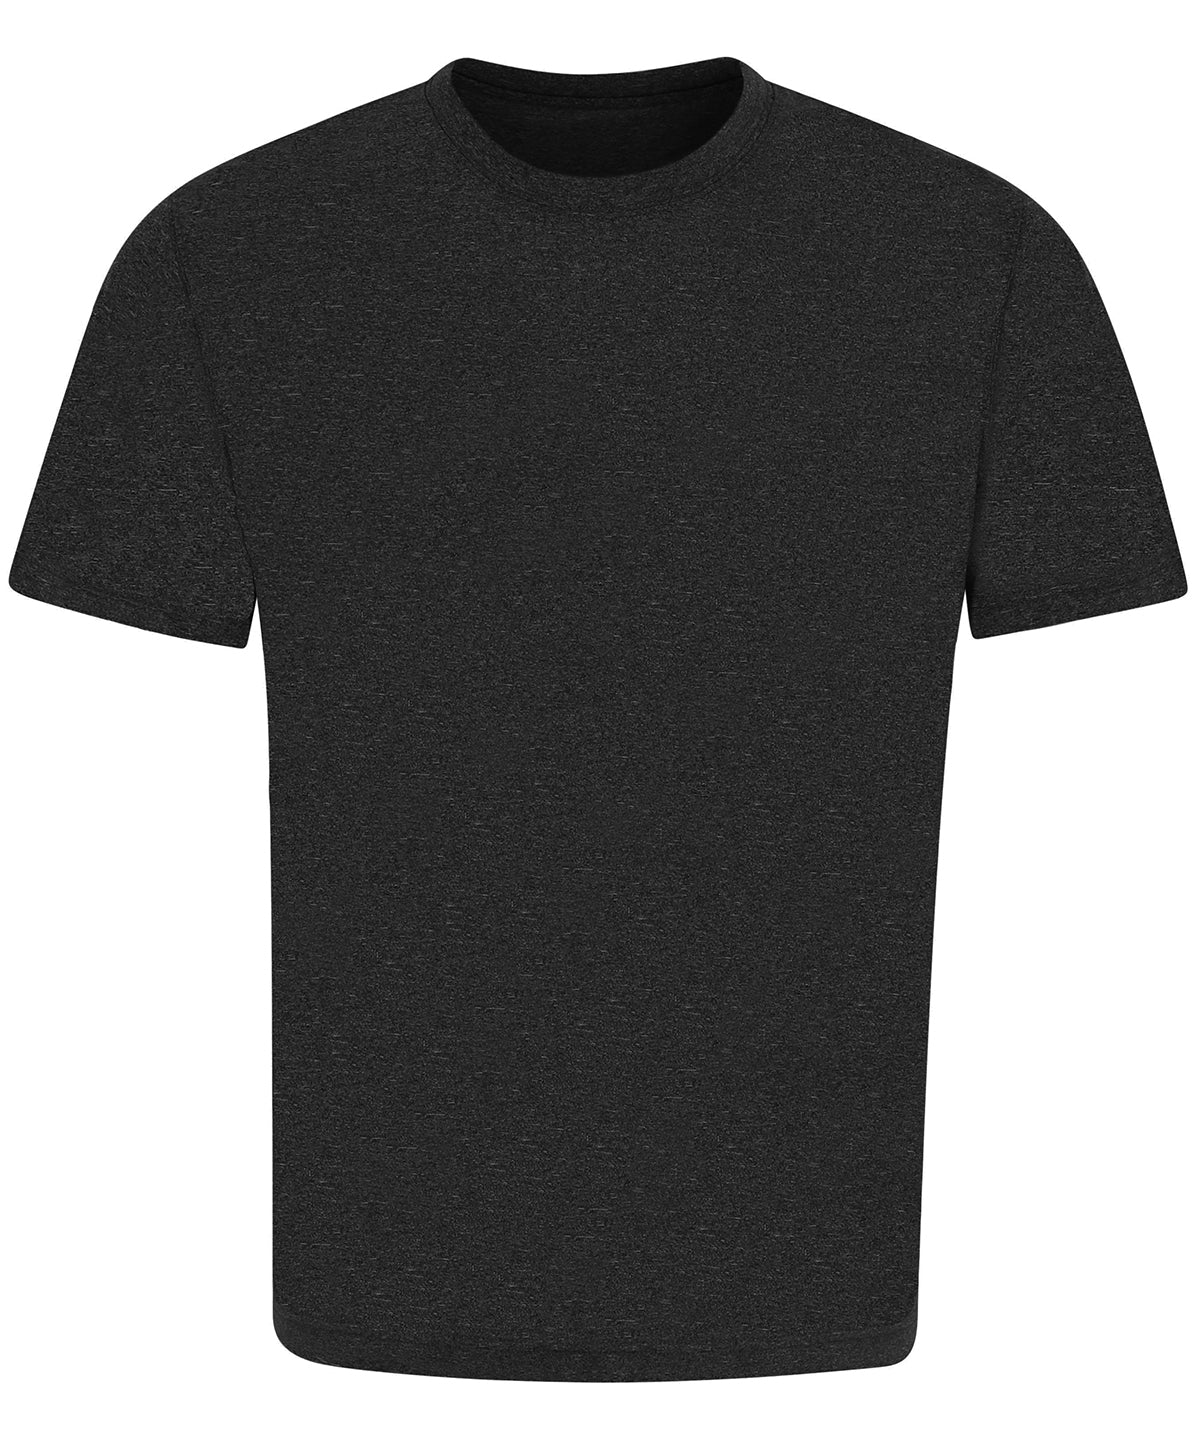 Personalised T-Shirts - Black AWDis Just Cool Cool urban marl T